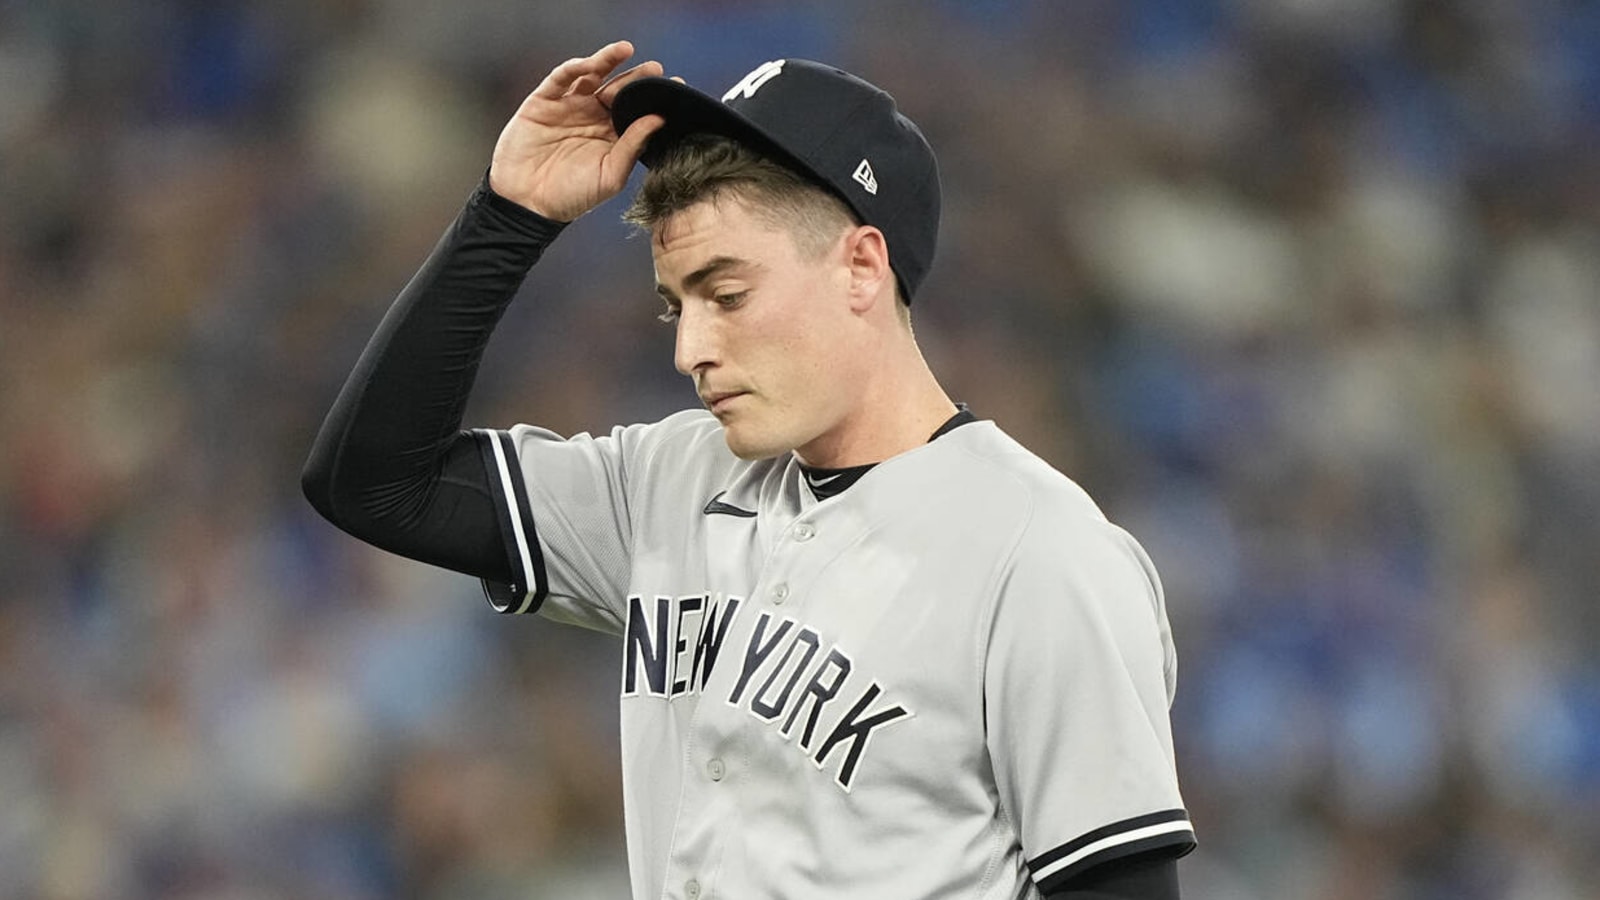 Watch: Announcer's jinx caps Yankees' brutal loss